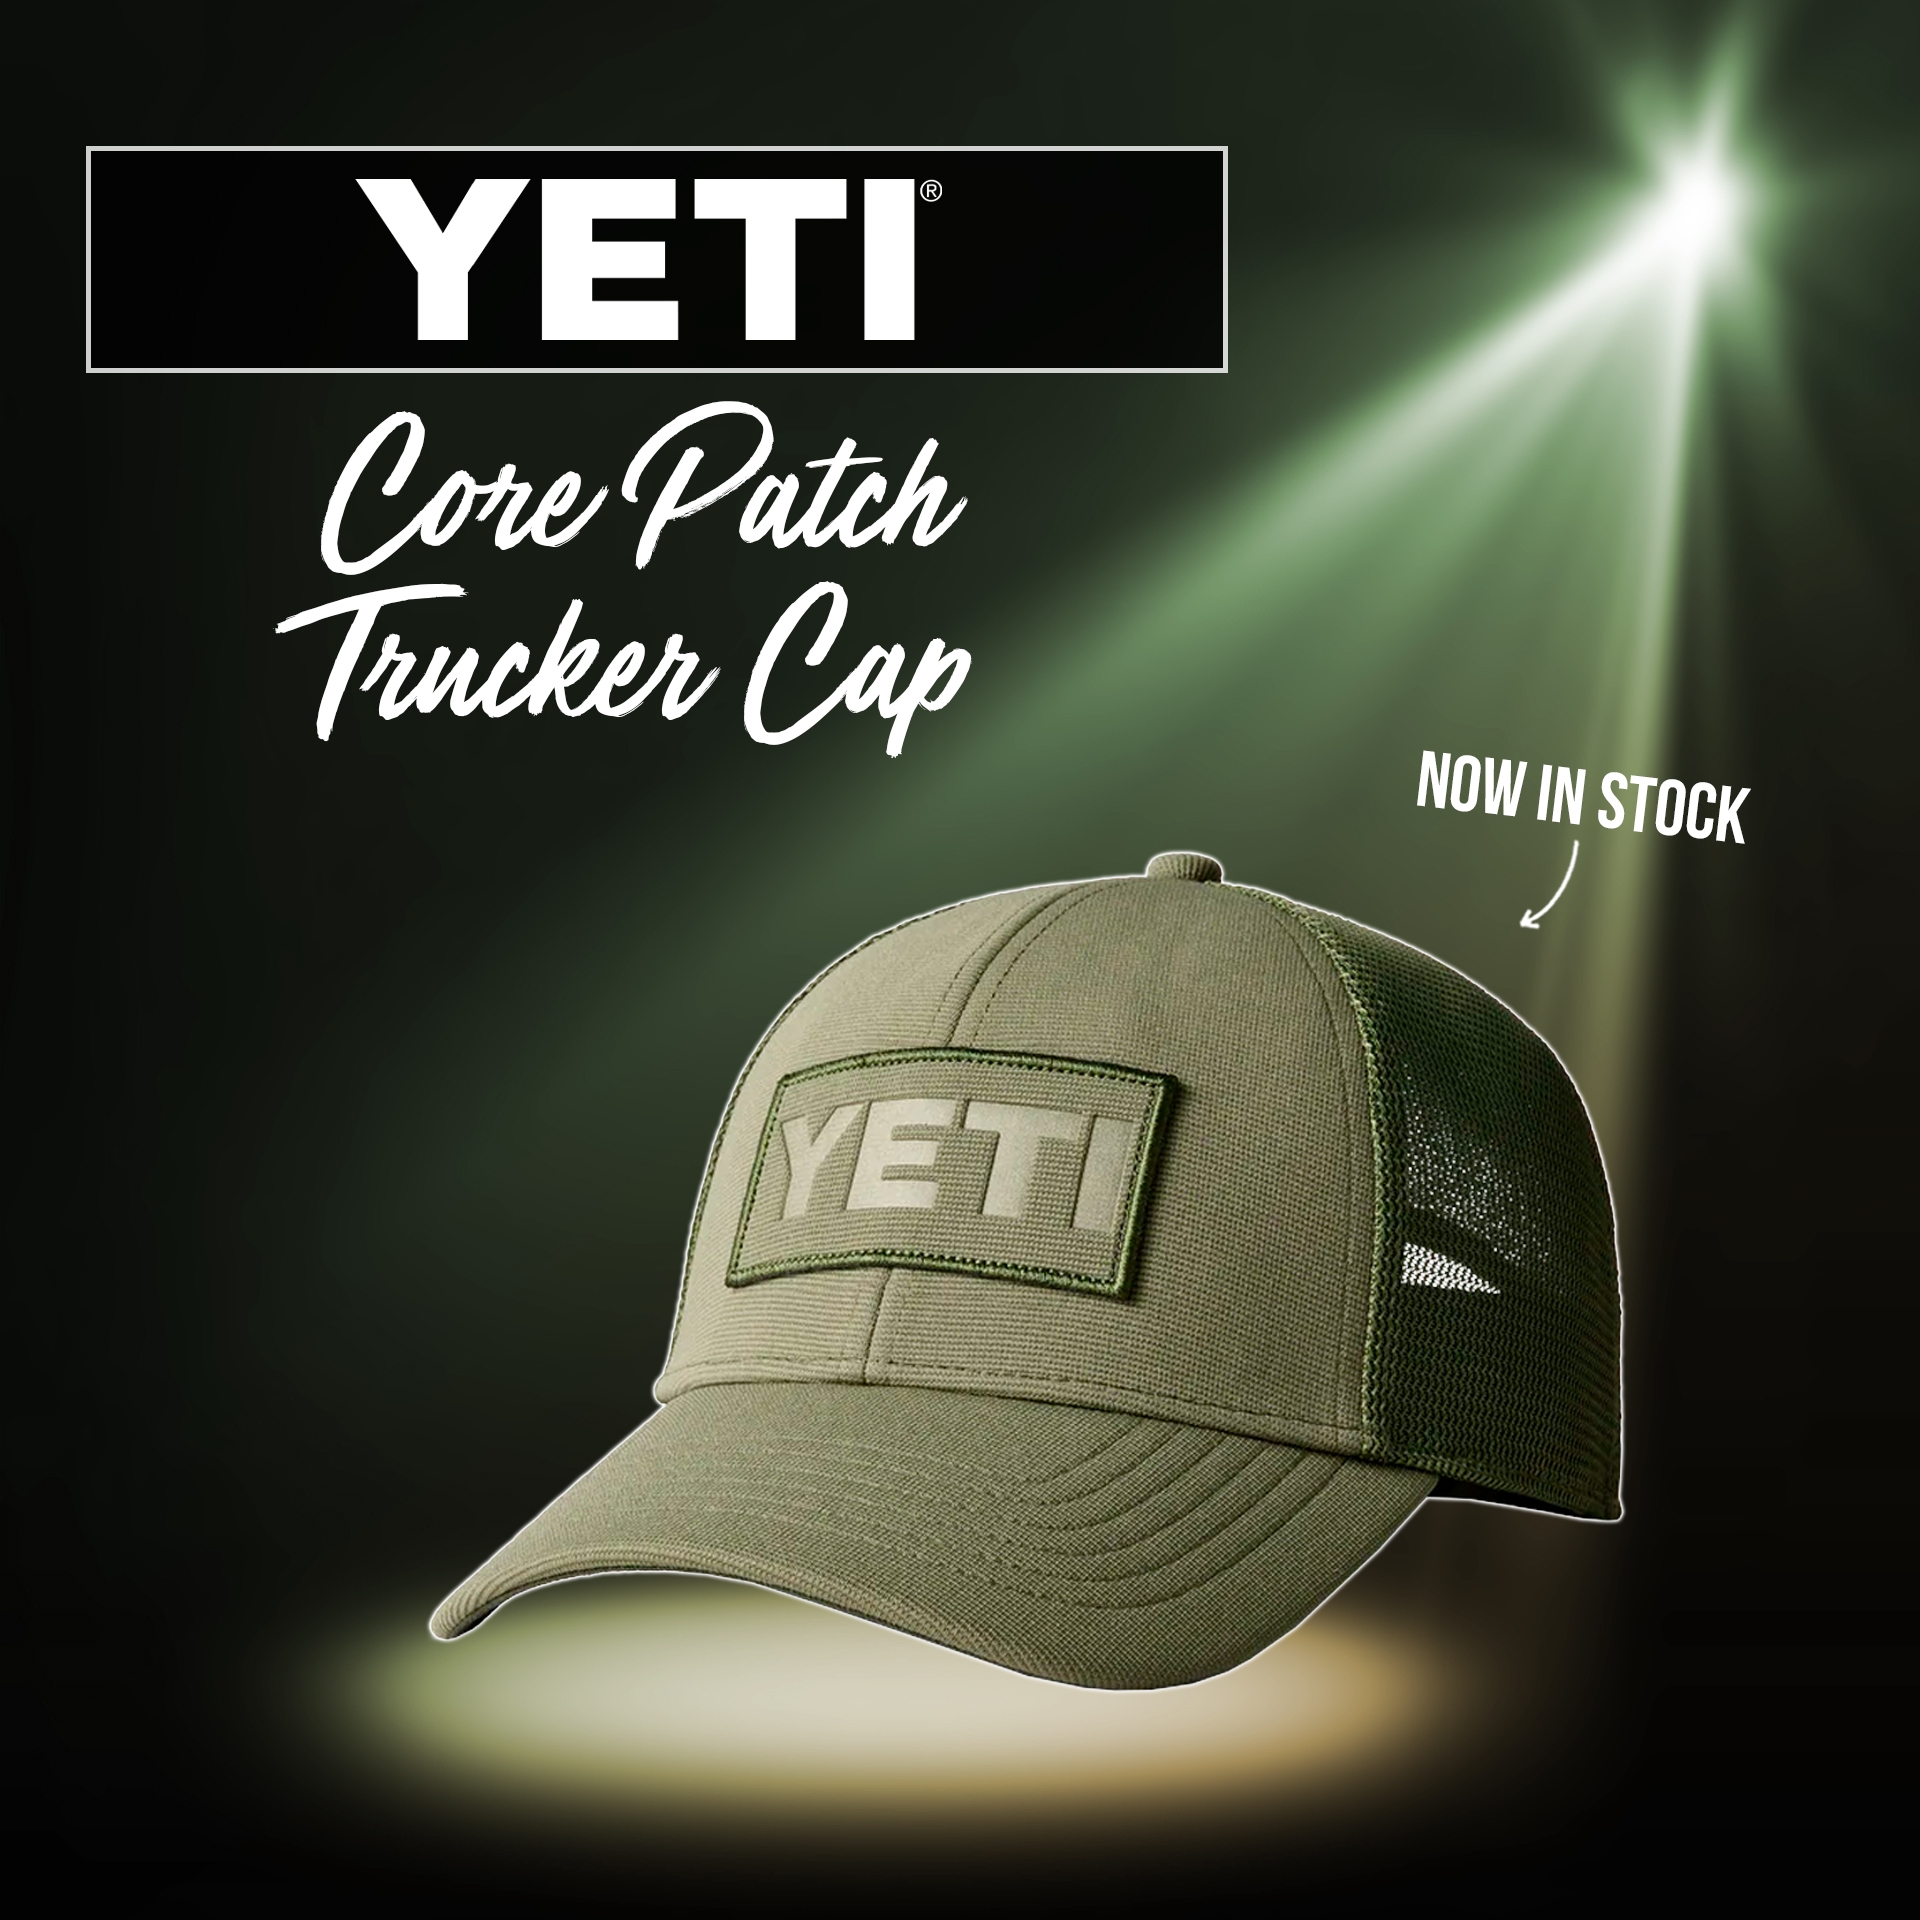 New - Yeti Core Patch Trucker Cap